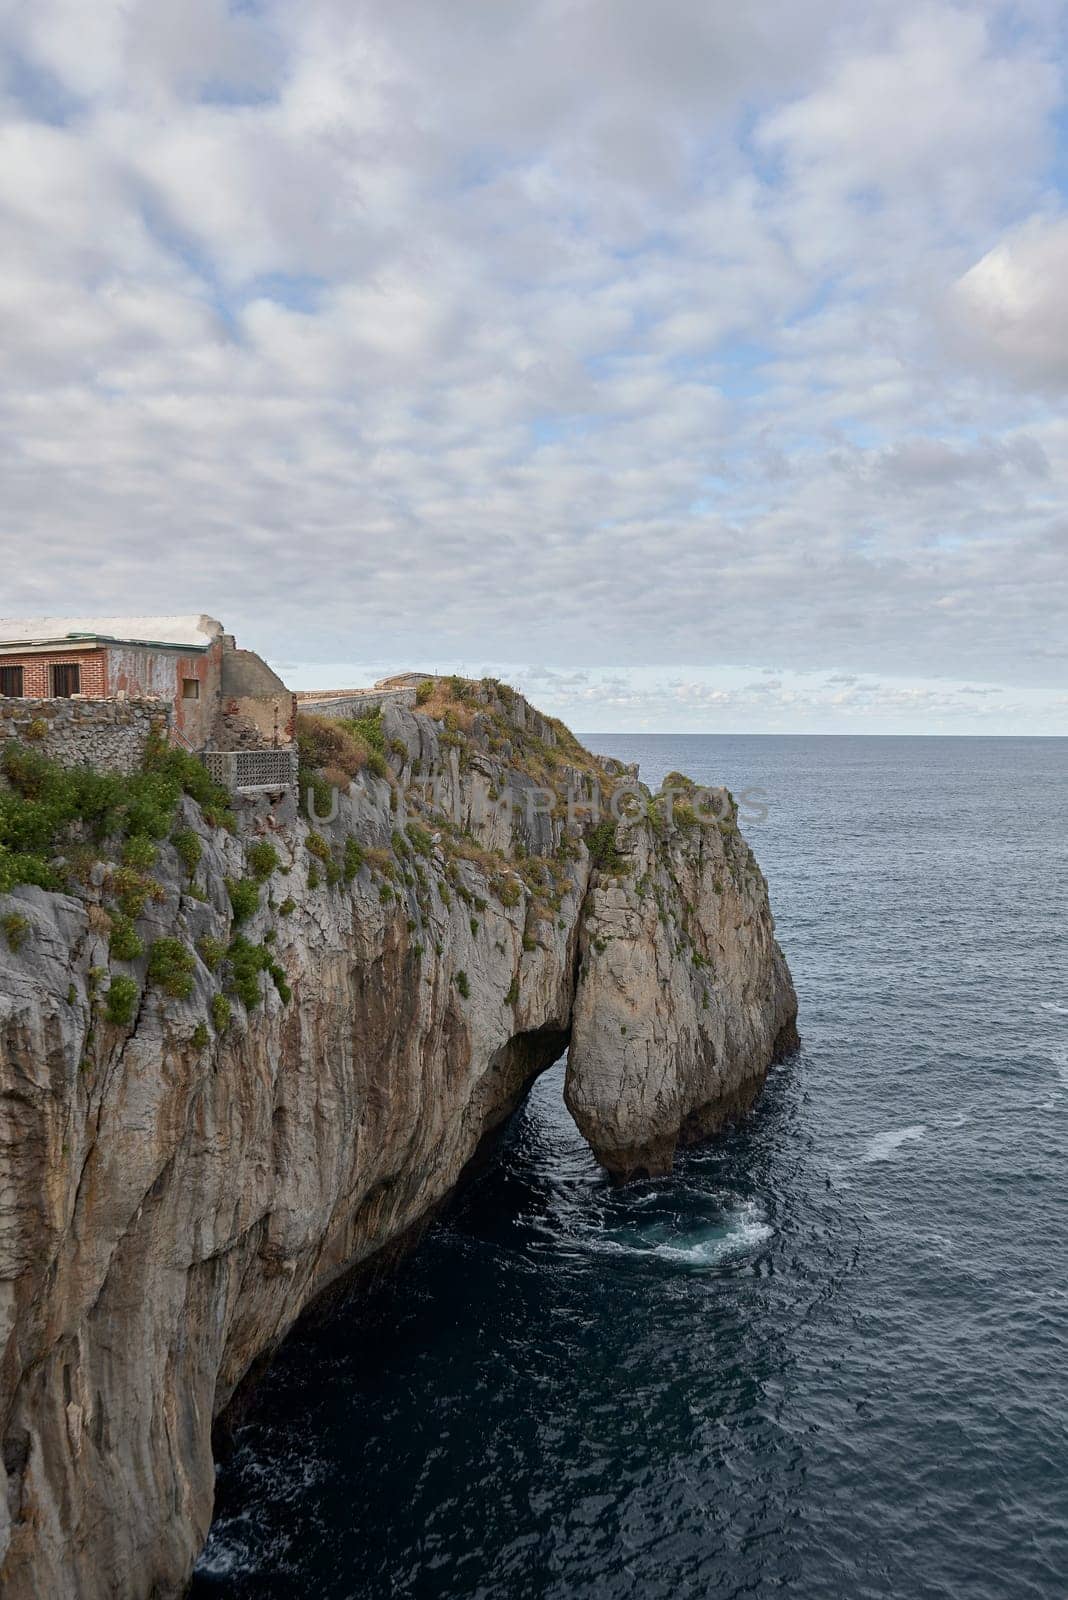 Cliffs on the coast of Castro Urdiales, Spain by raul_ruiz